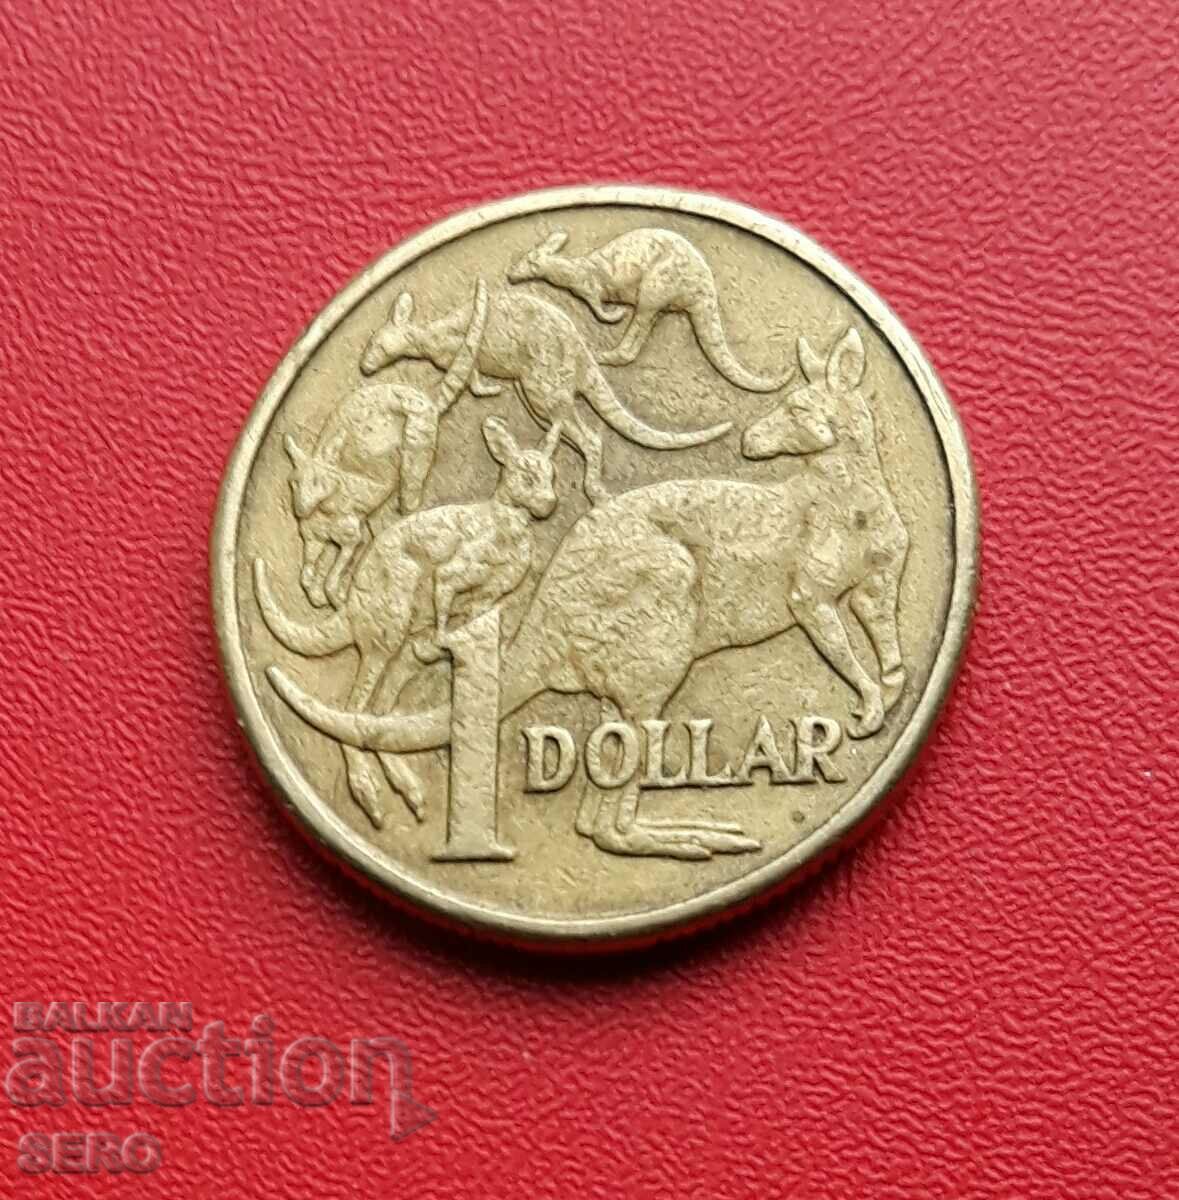 Australia - 1 USD 1985